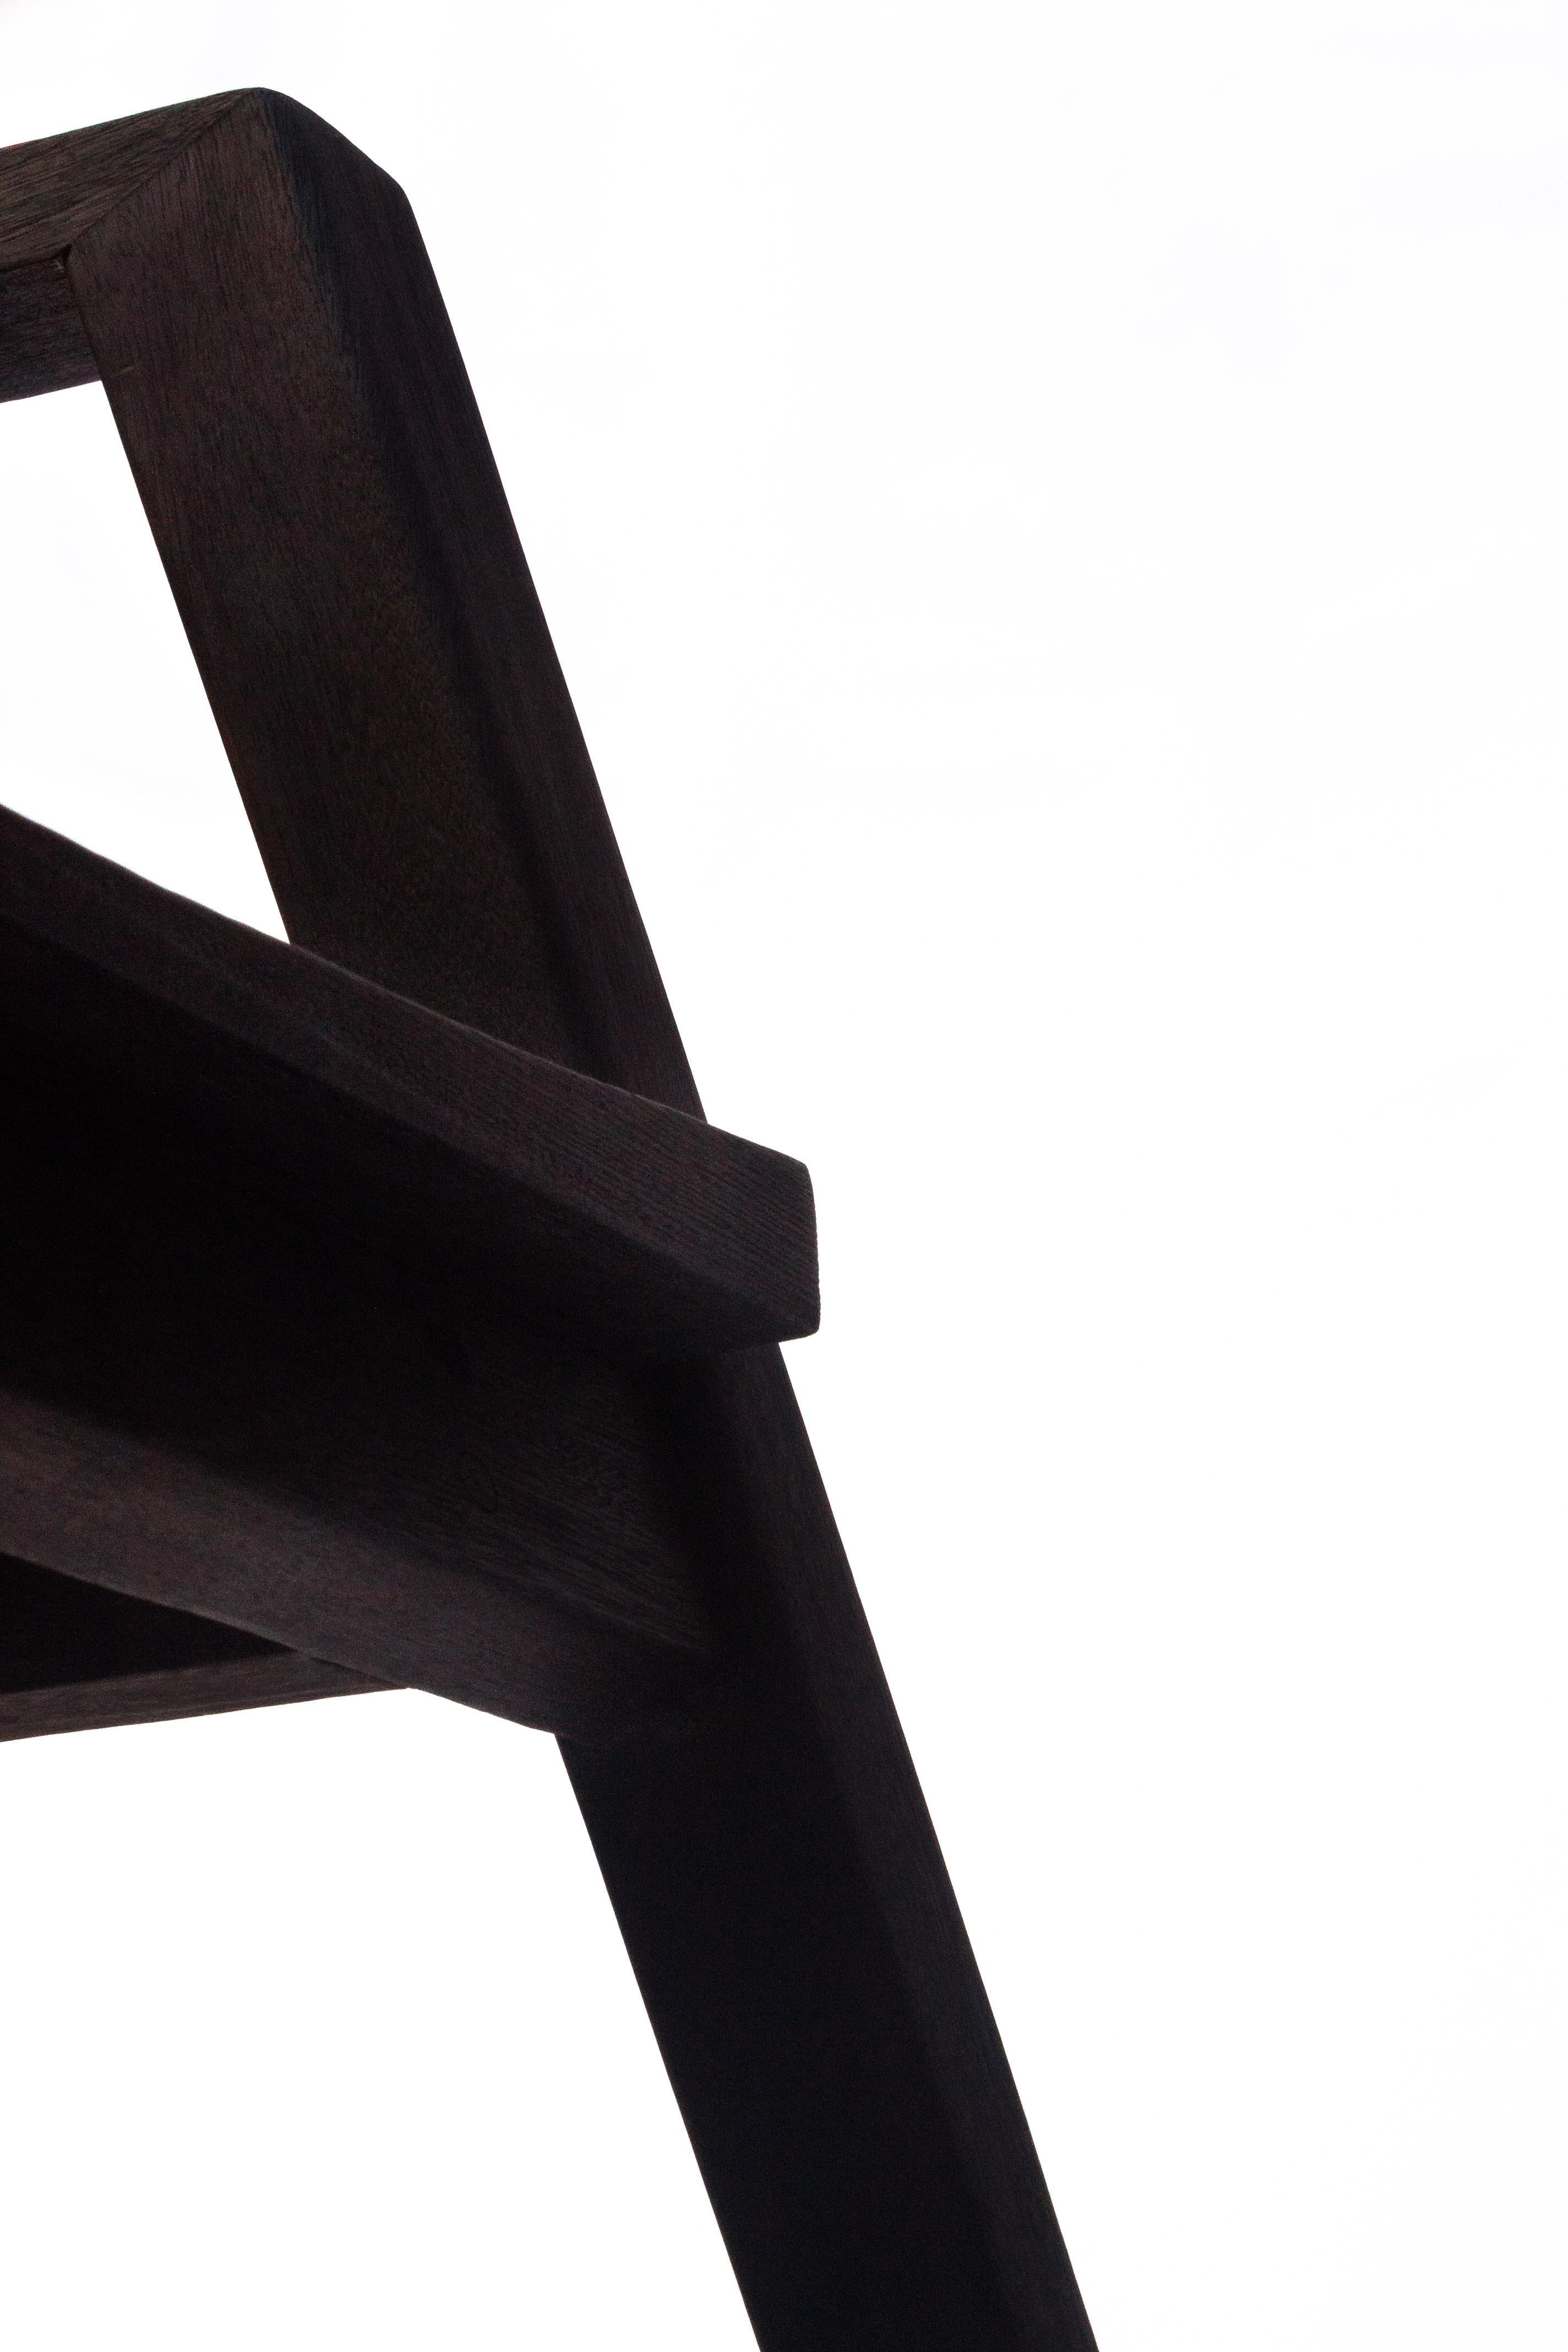 Contemporary Abraxas Chair, by Camilo Andres Rodriguez Marquez